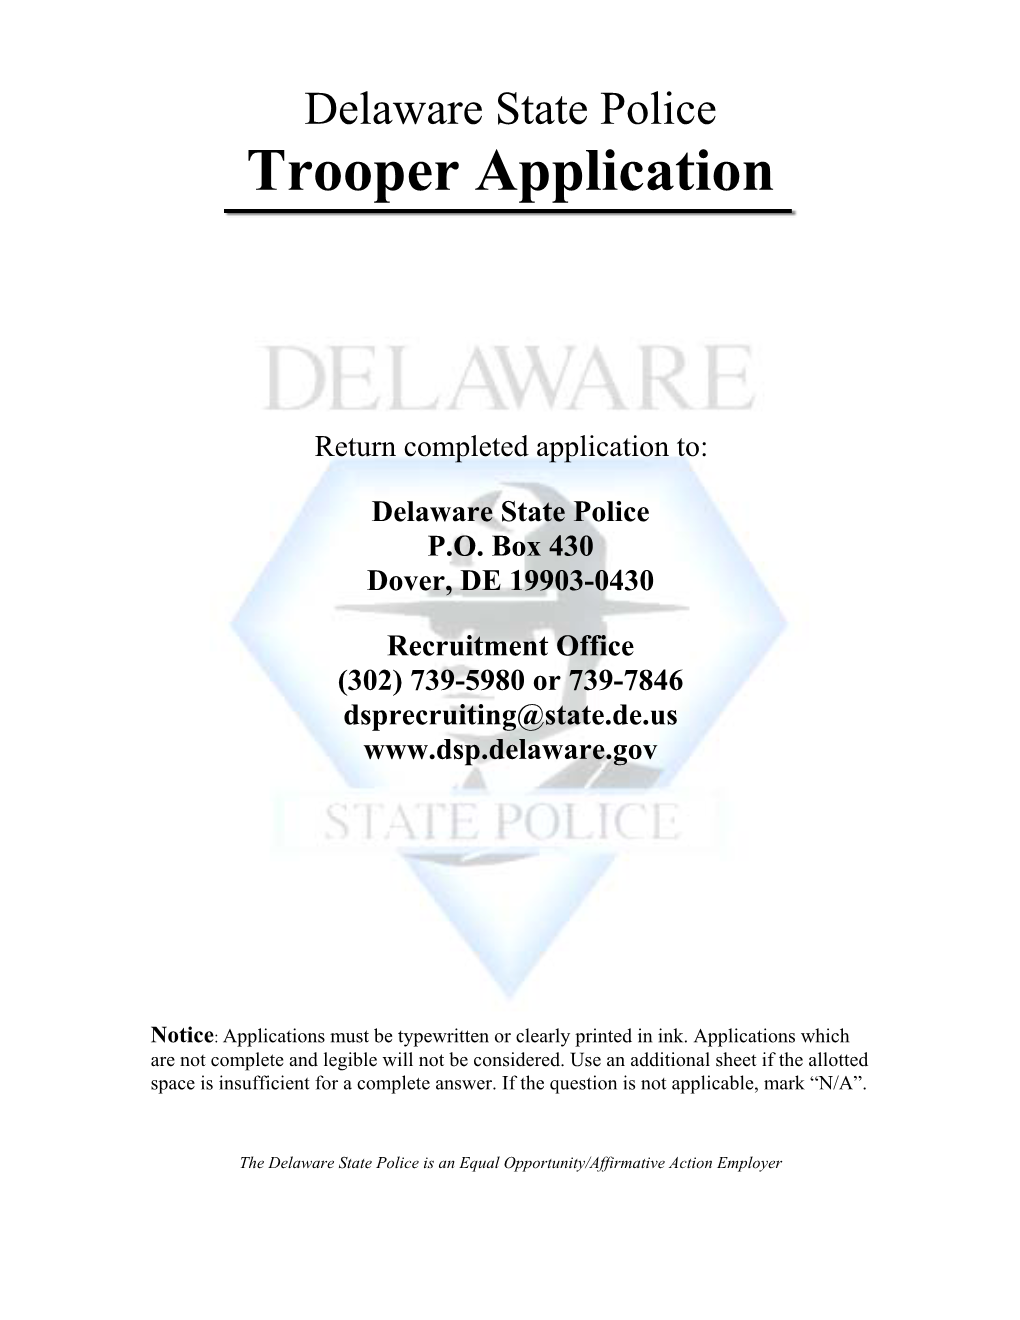 Trooper Application